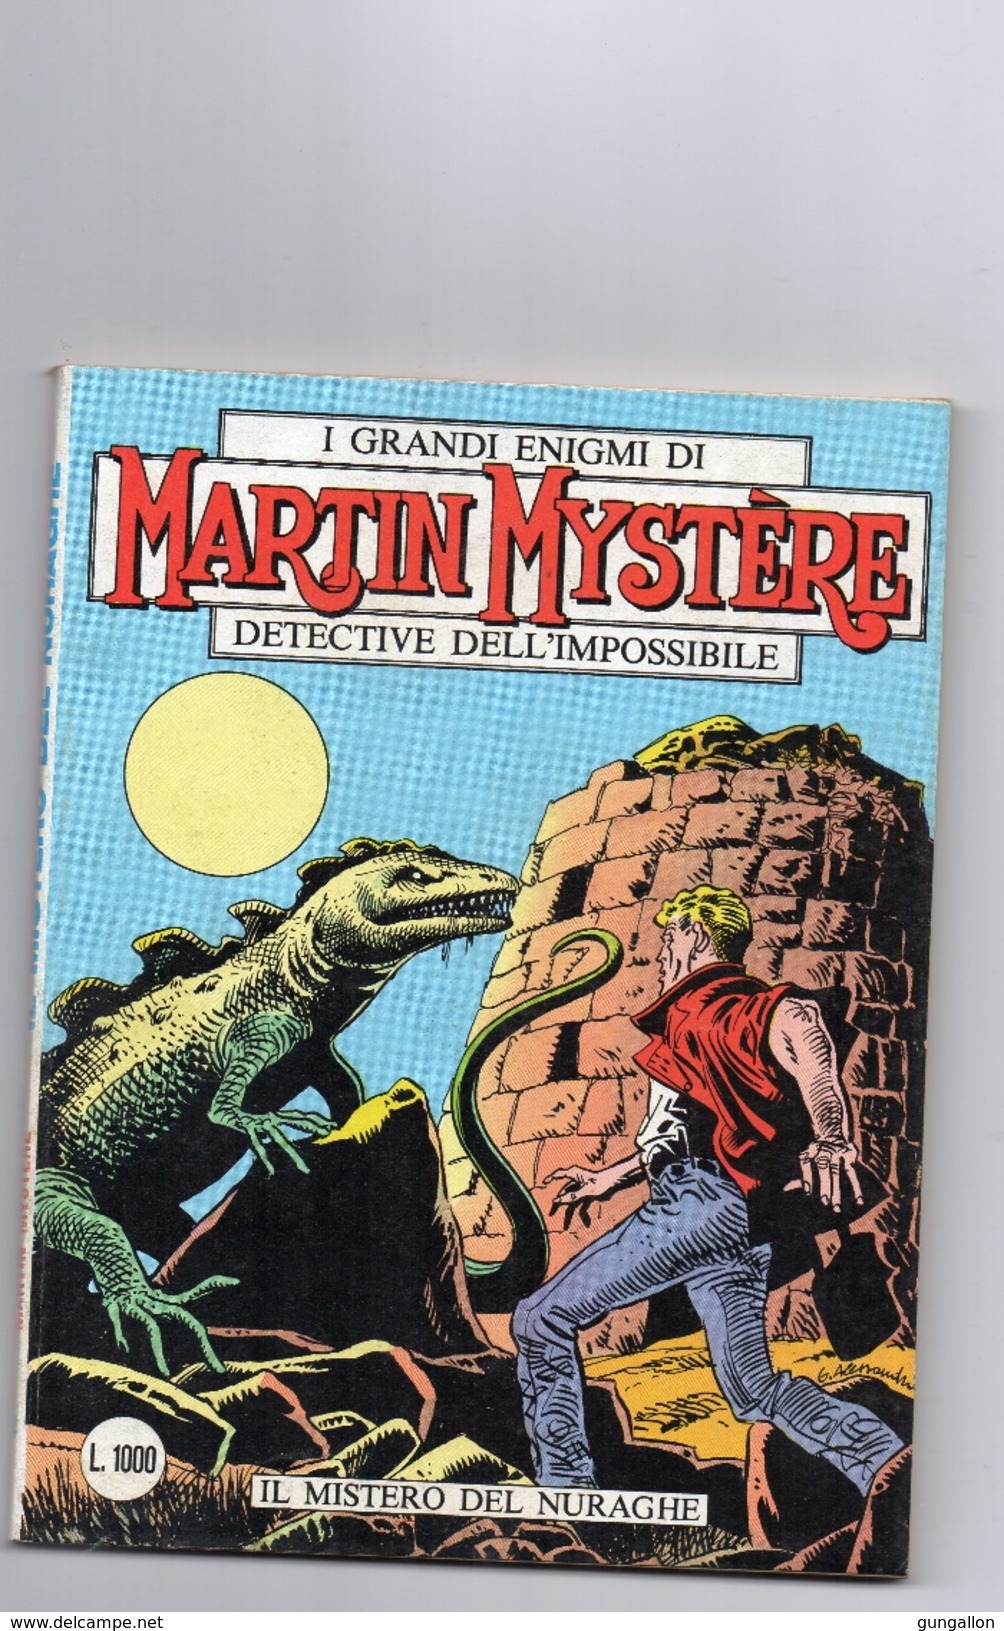 Martin Mystere (Daim Press 1985)  N. 34 - Bonelli